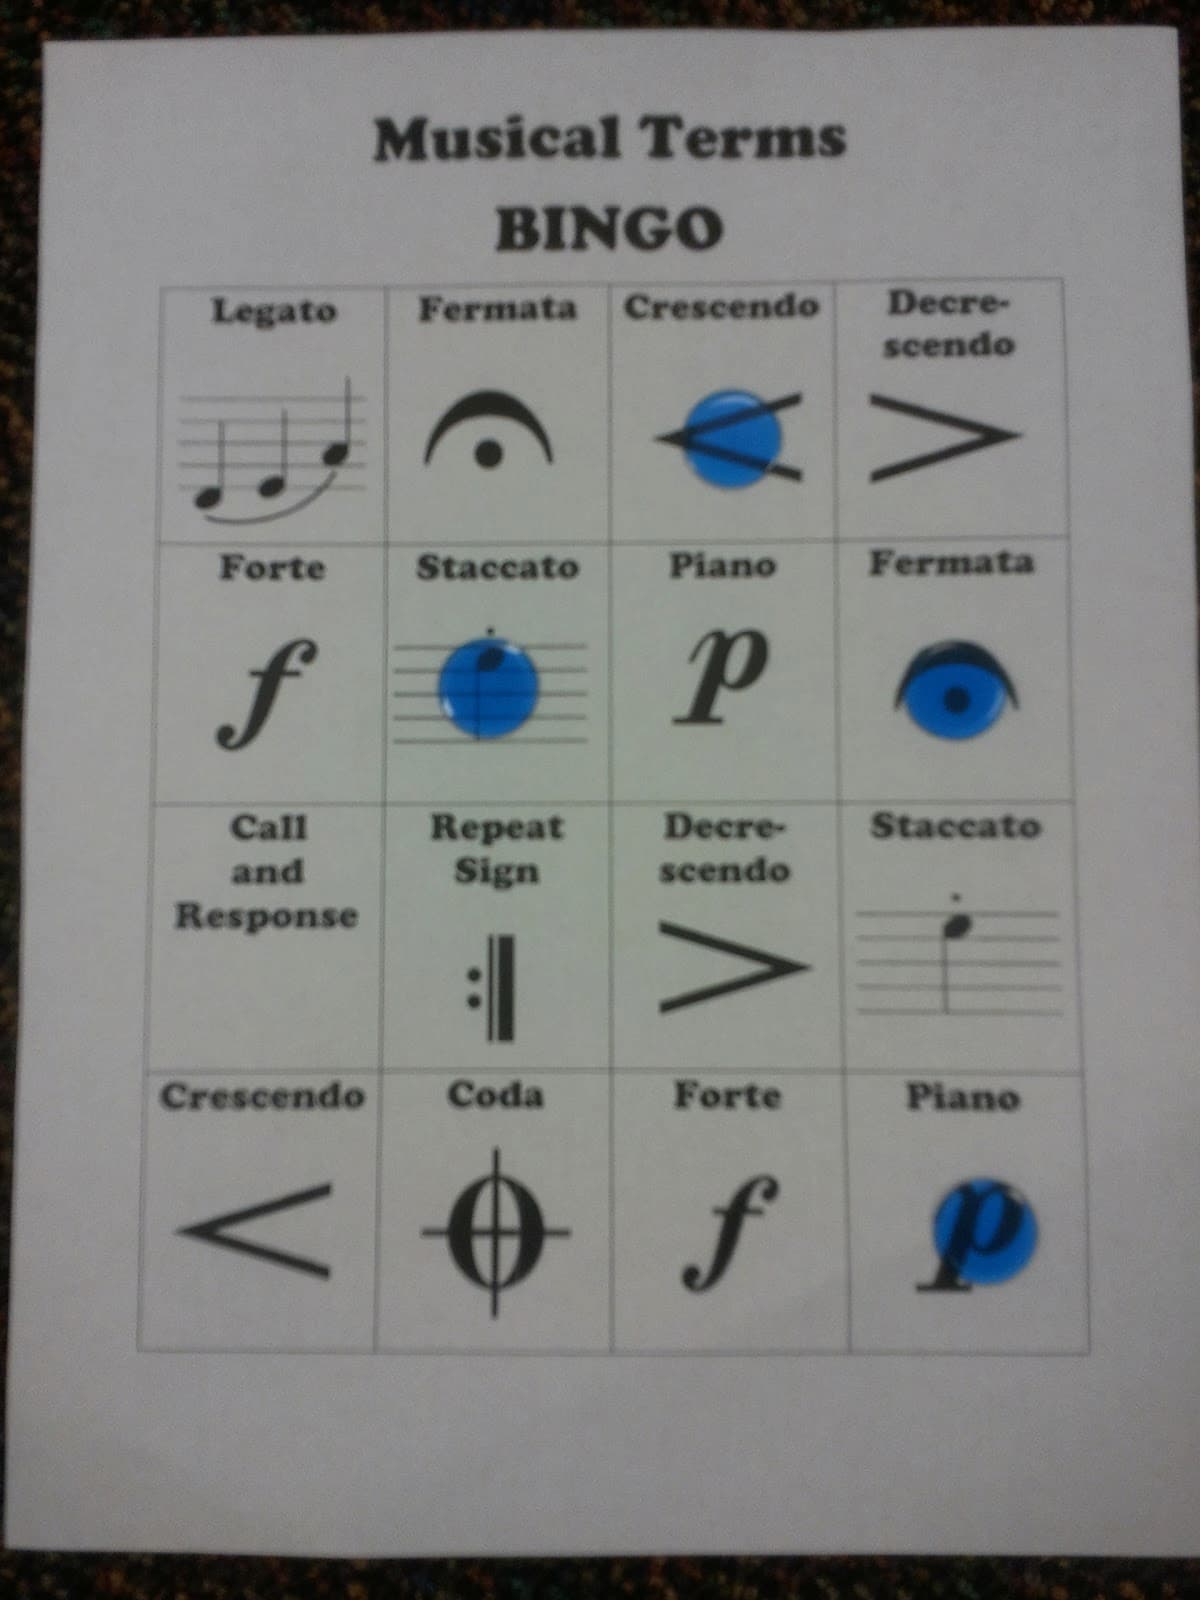 Musical terms bingo